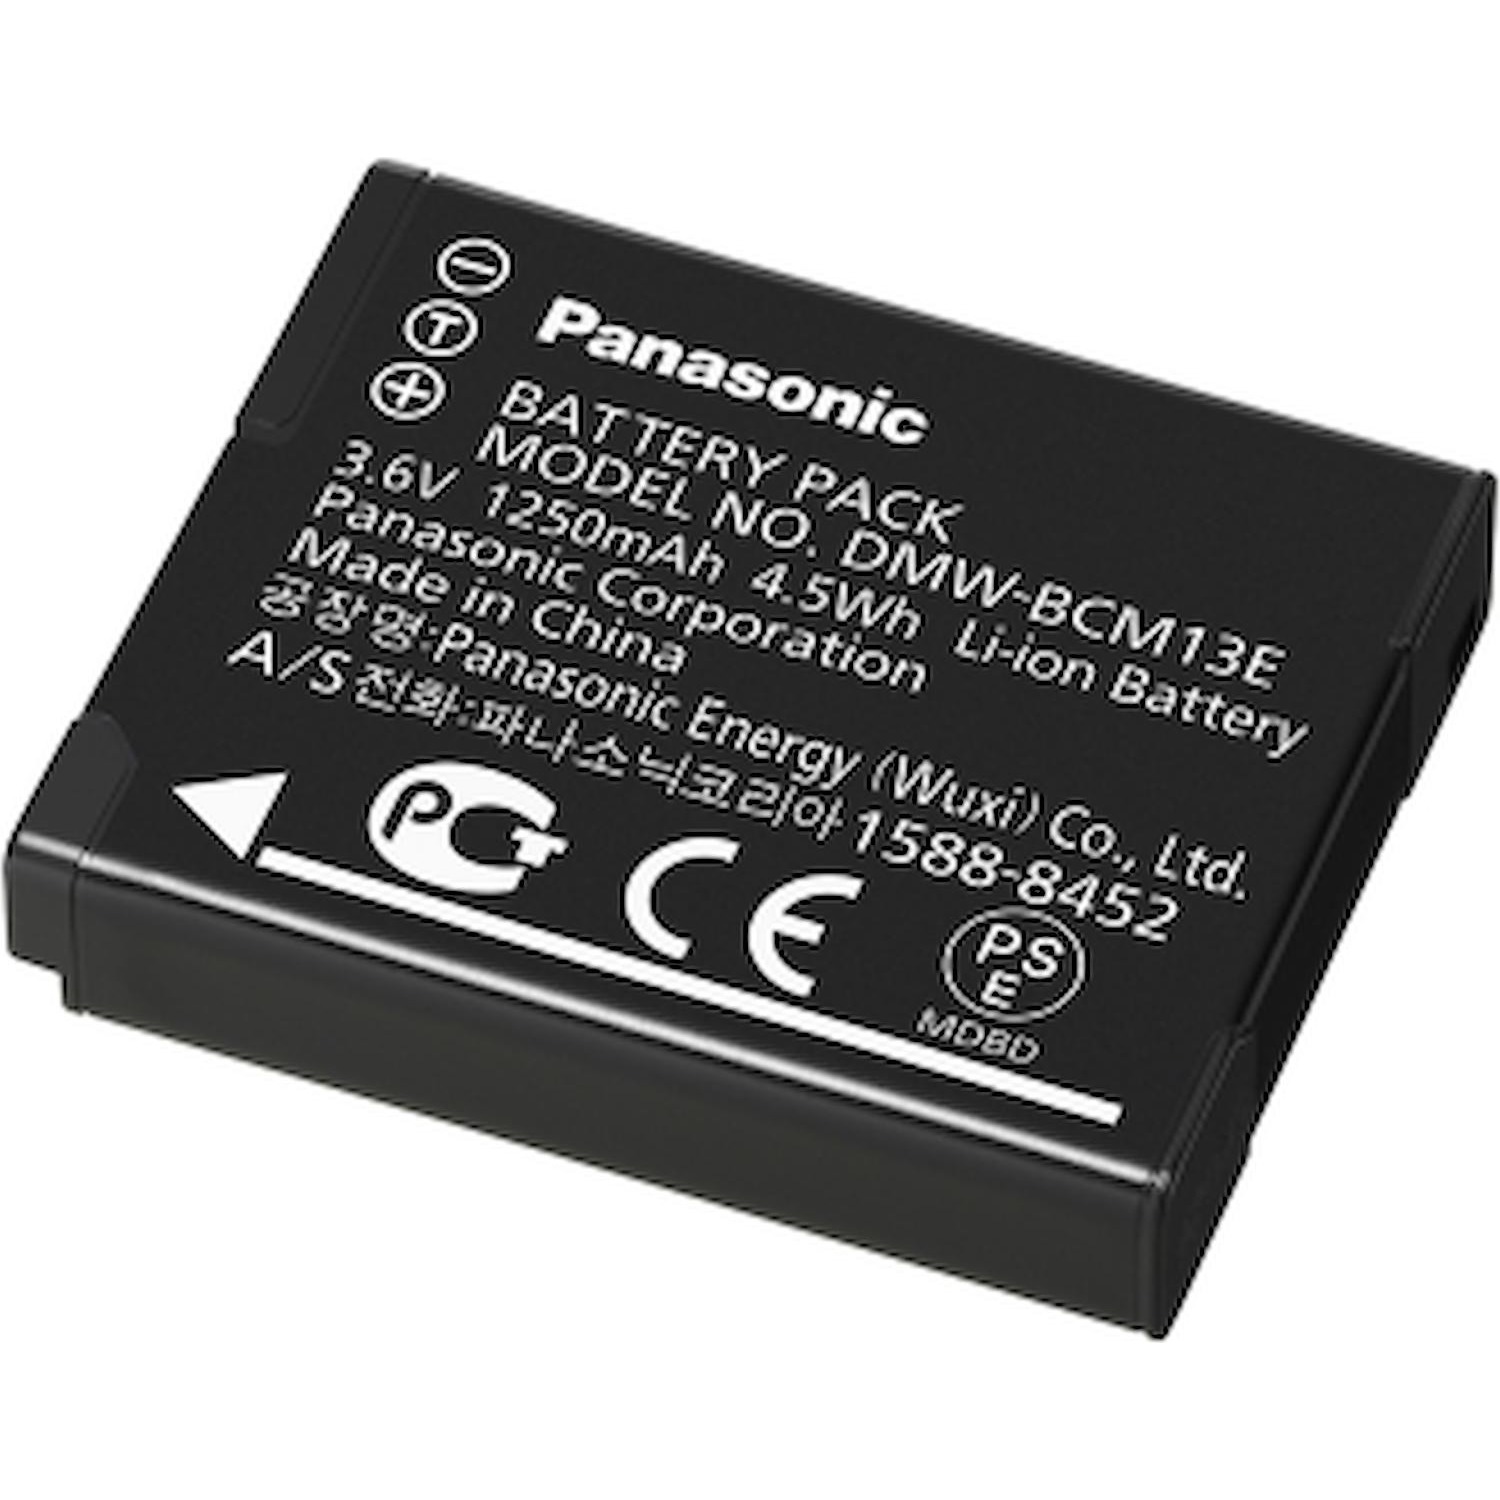 Immagine per Batteria Panasonic BCM13E per TZ40 TZ55 TZ60 TZ37 LZ40 FT5 da DIMOStore